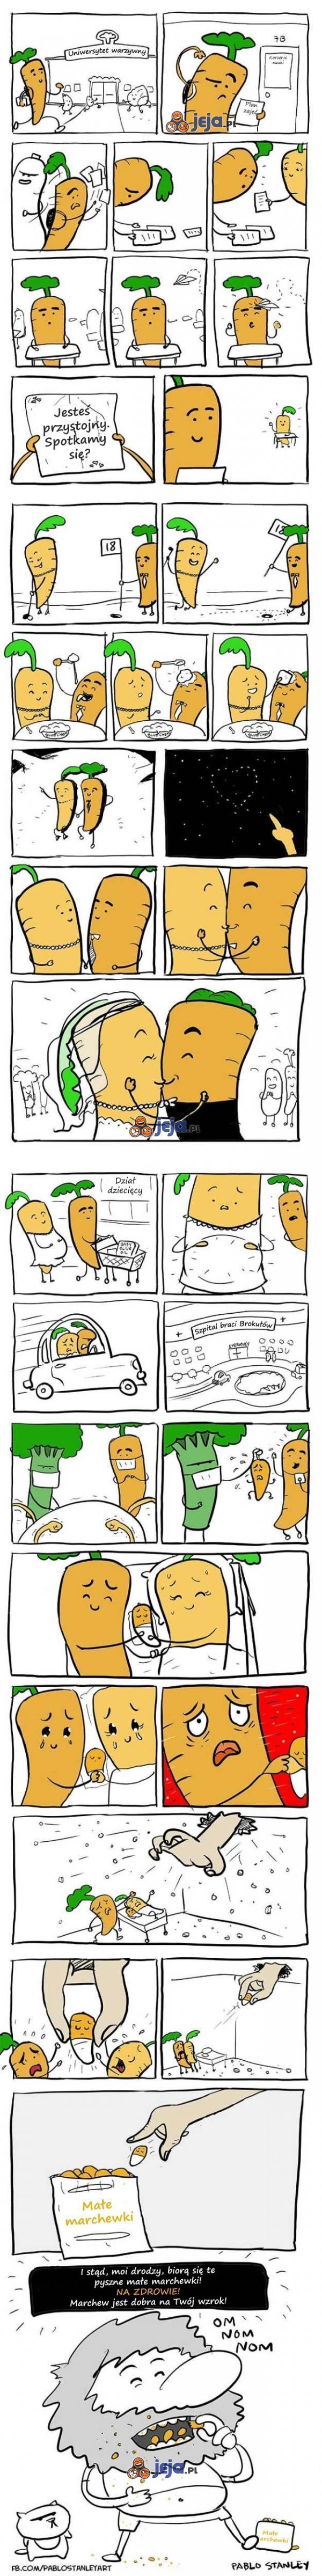 Historia pewnej marchewki